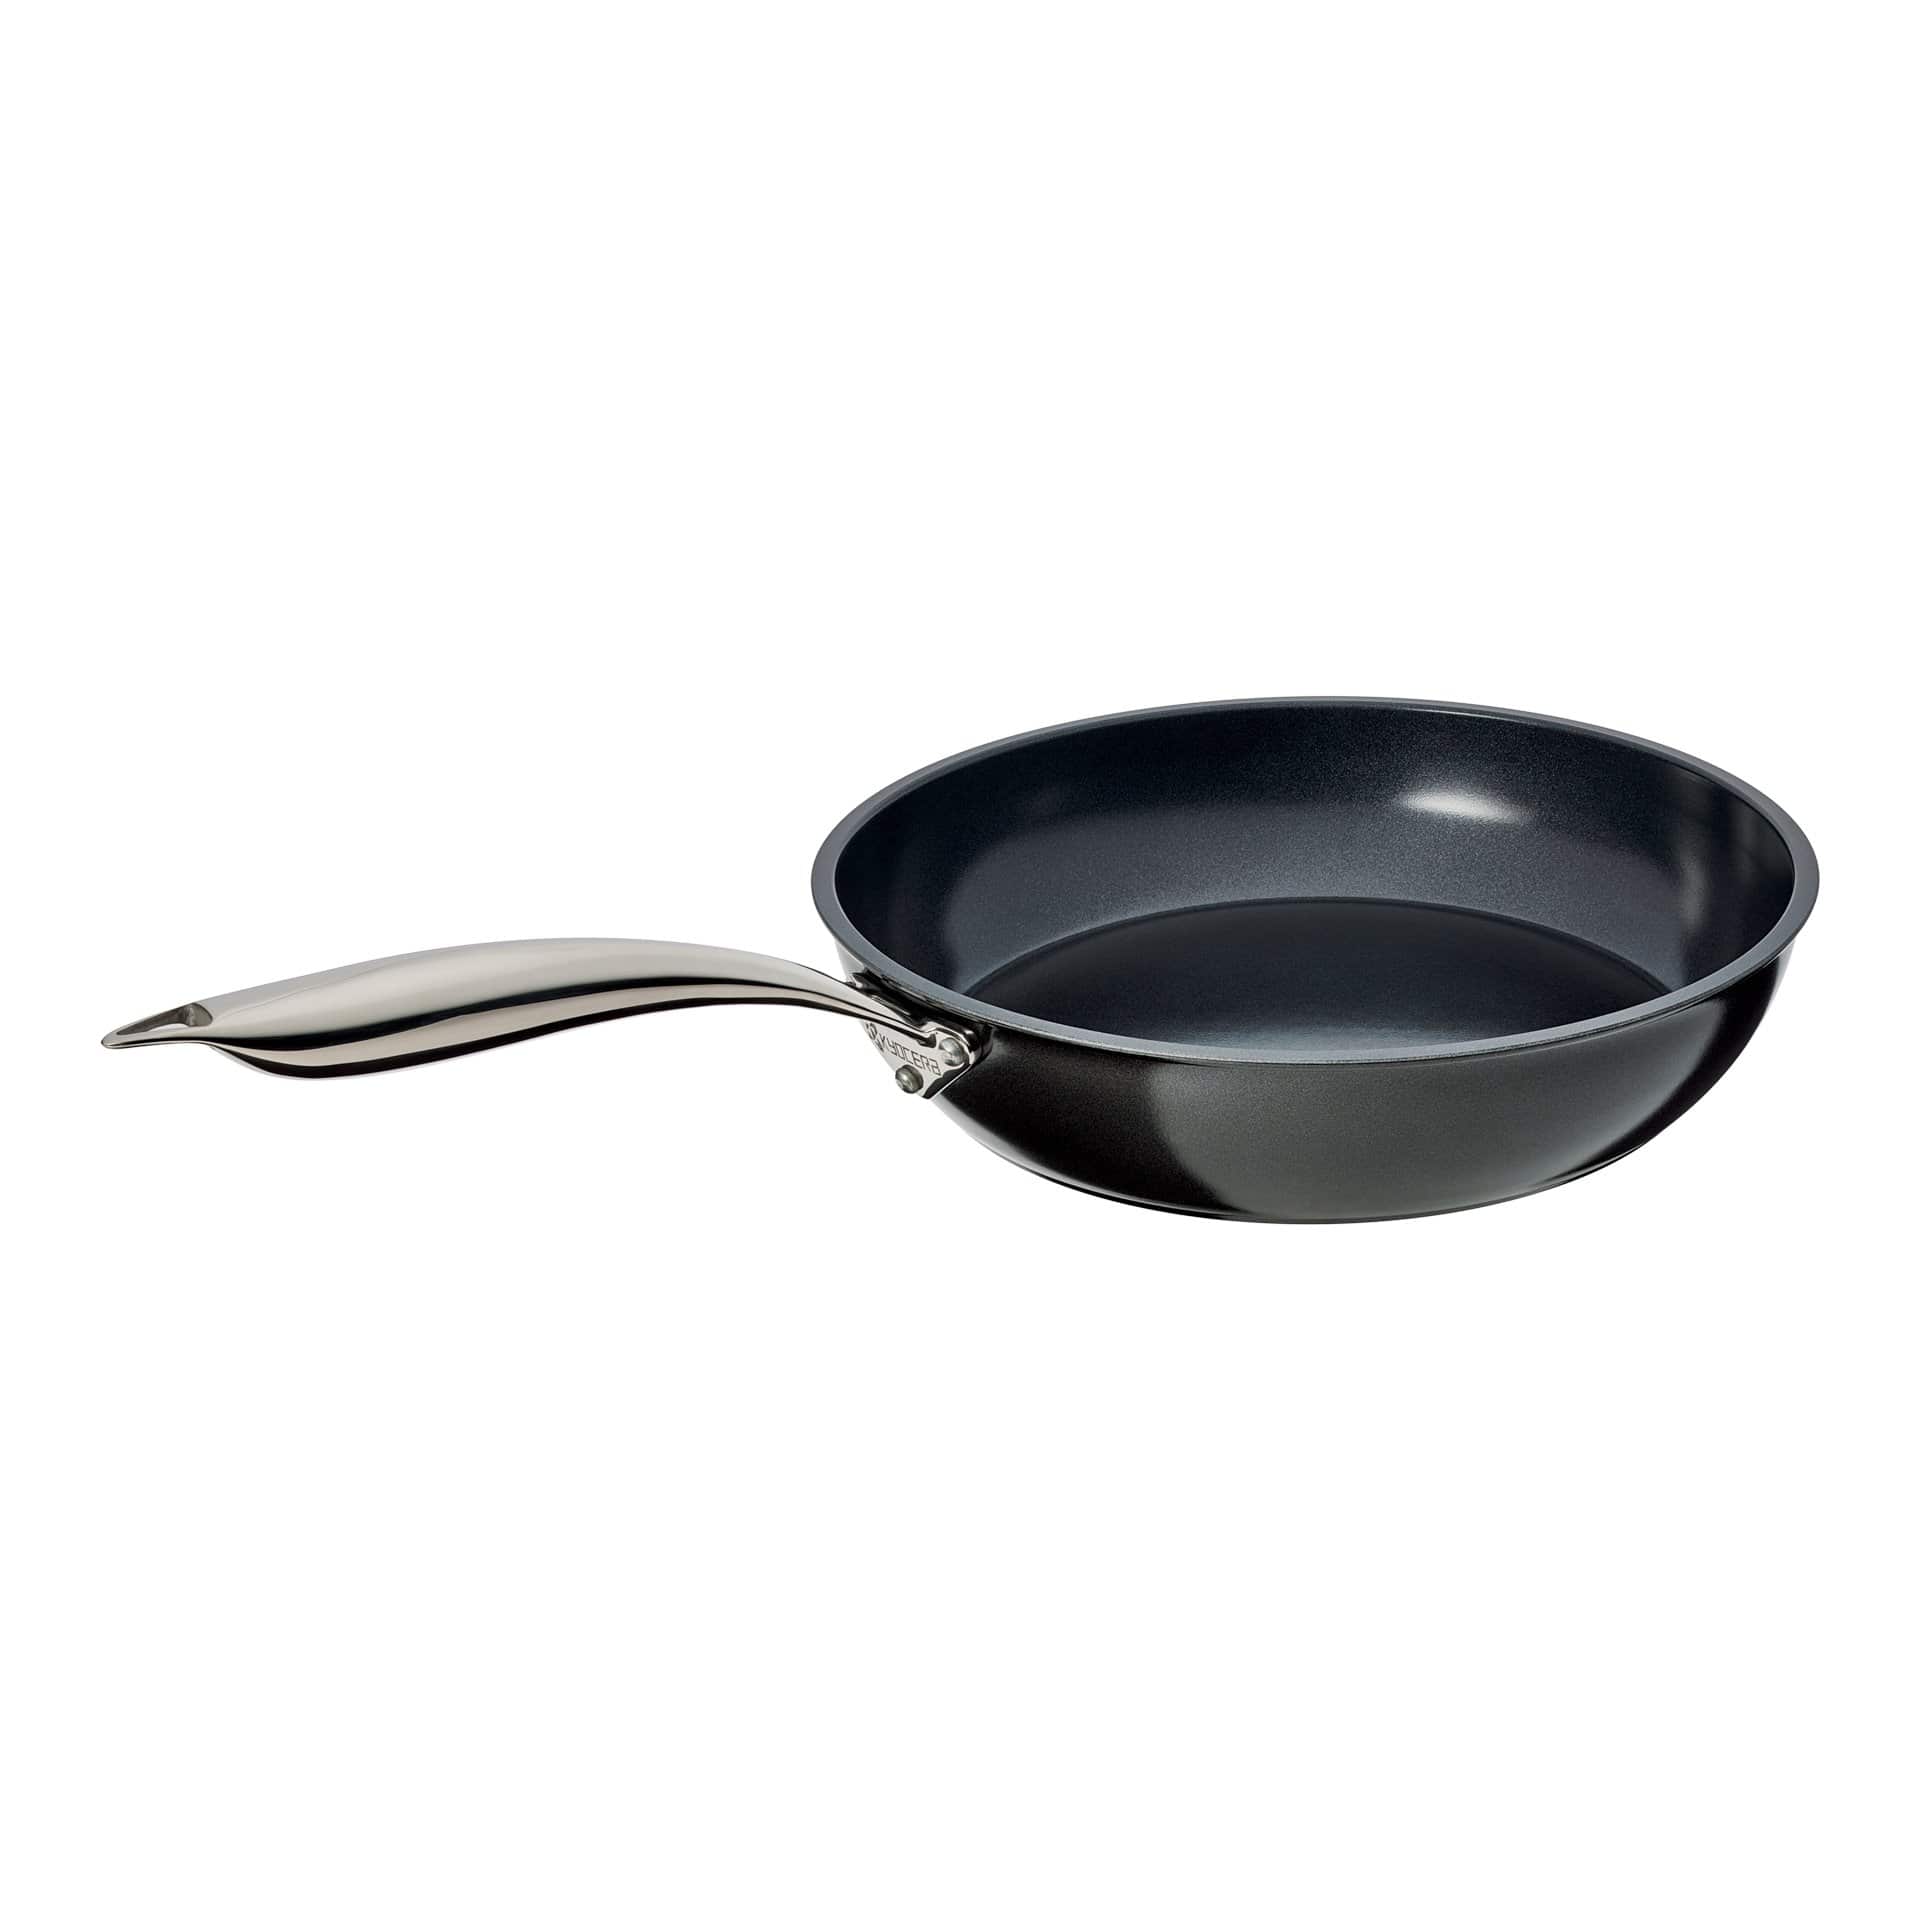 Kyocera Ceramic Nonstick Fry Pan, 12 inch, Black Ceramic Coated